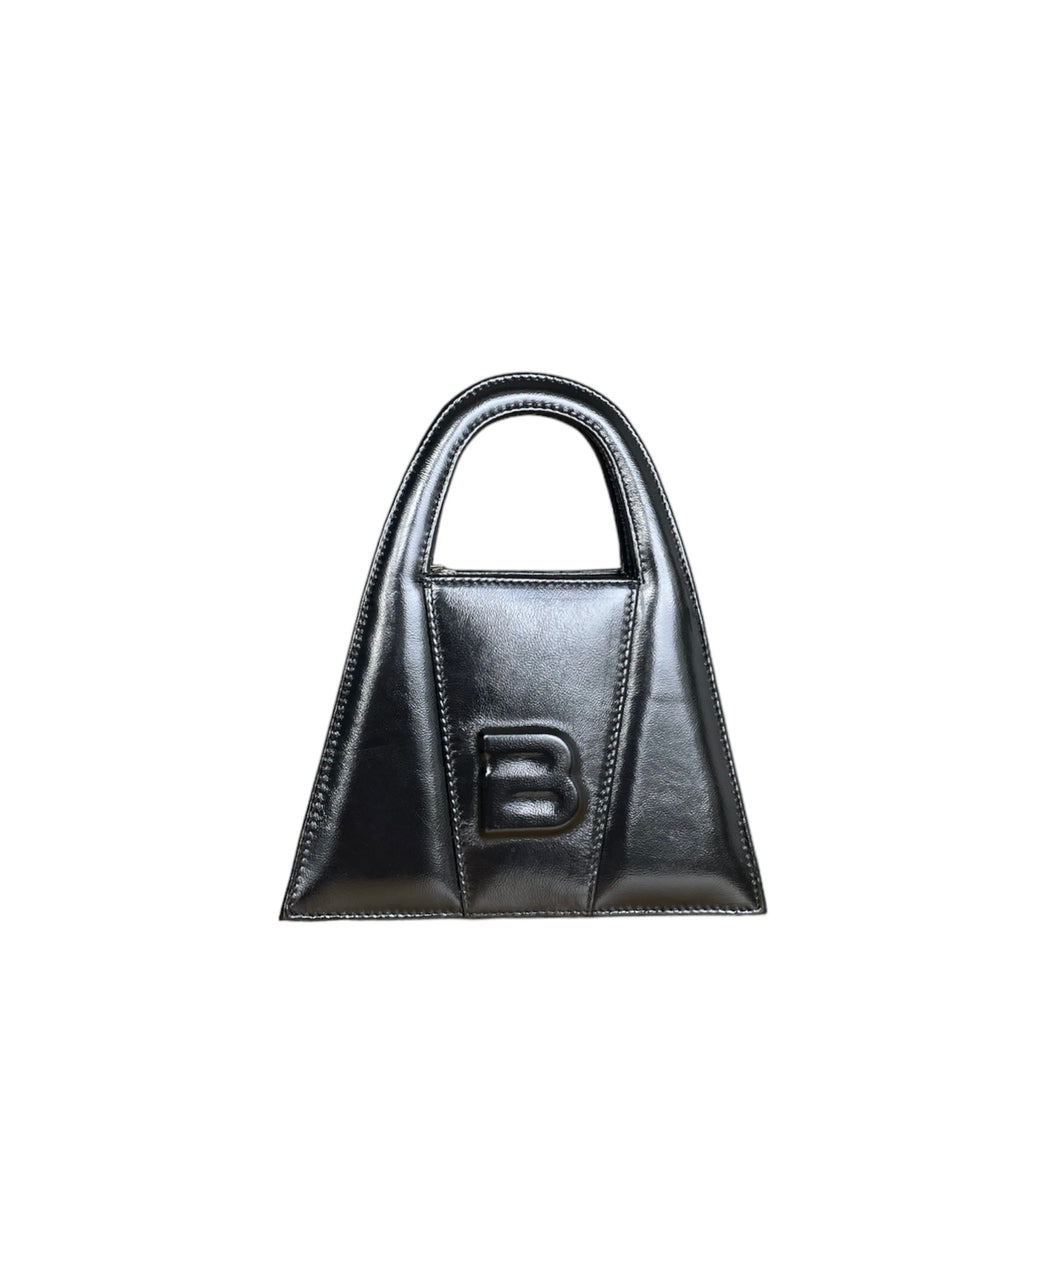 Glossy Black Leather Minnie Lock Bag- LIMITED EDITION